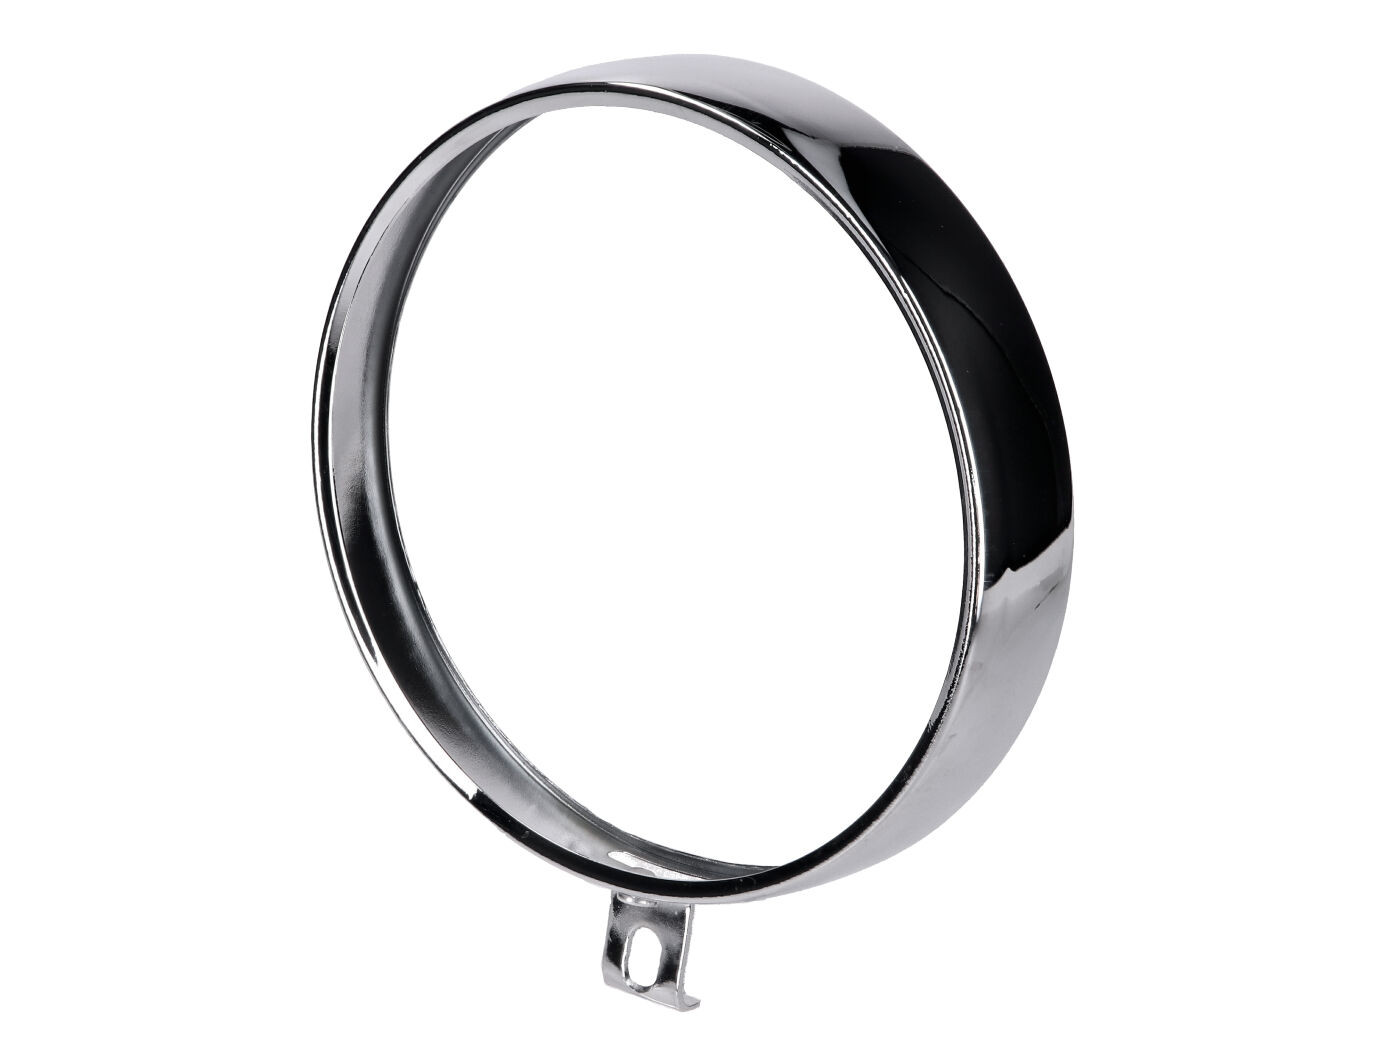 Fényszóró gyűrű 140/145mm króm Simson S50-hez